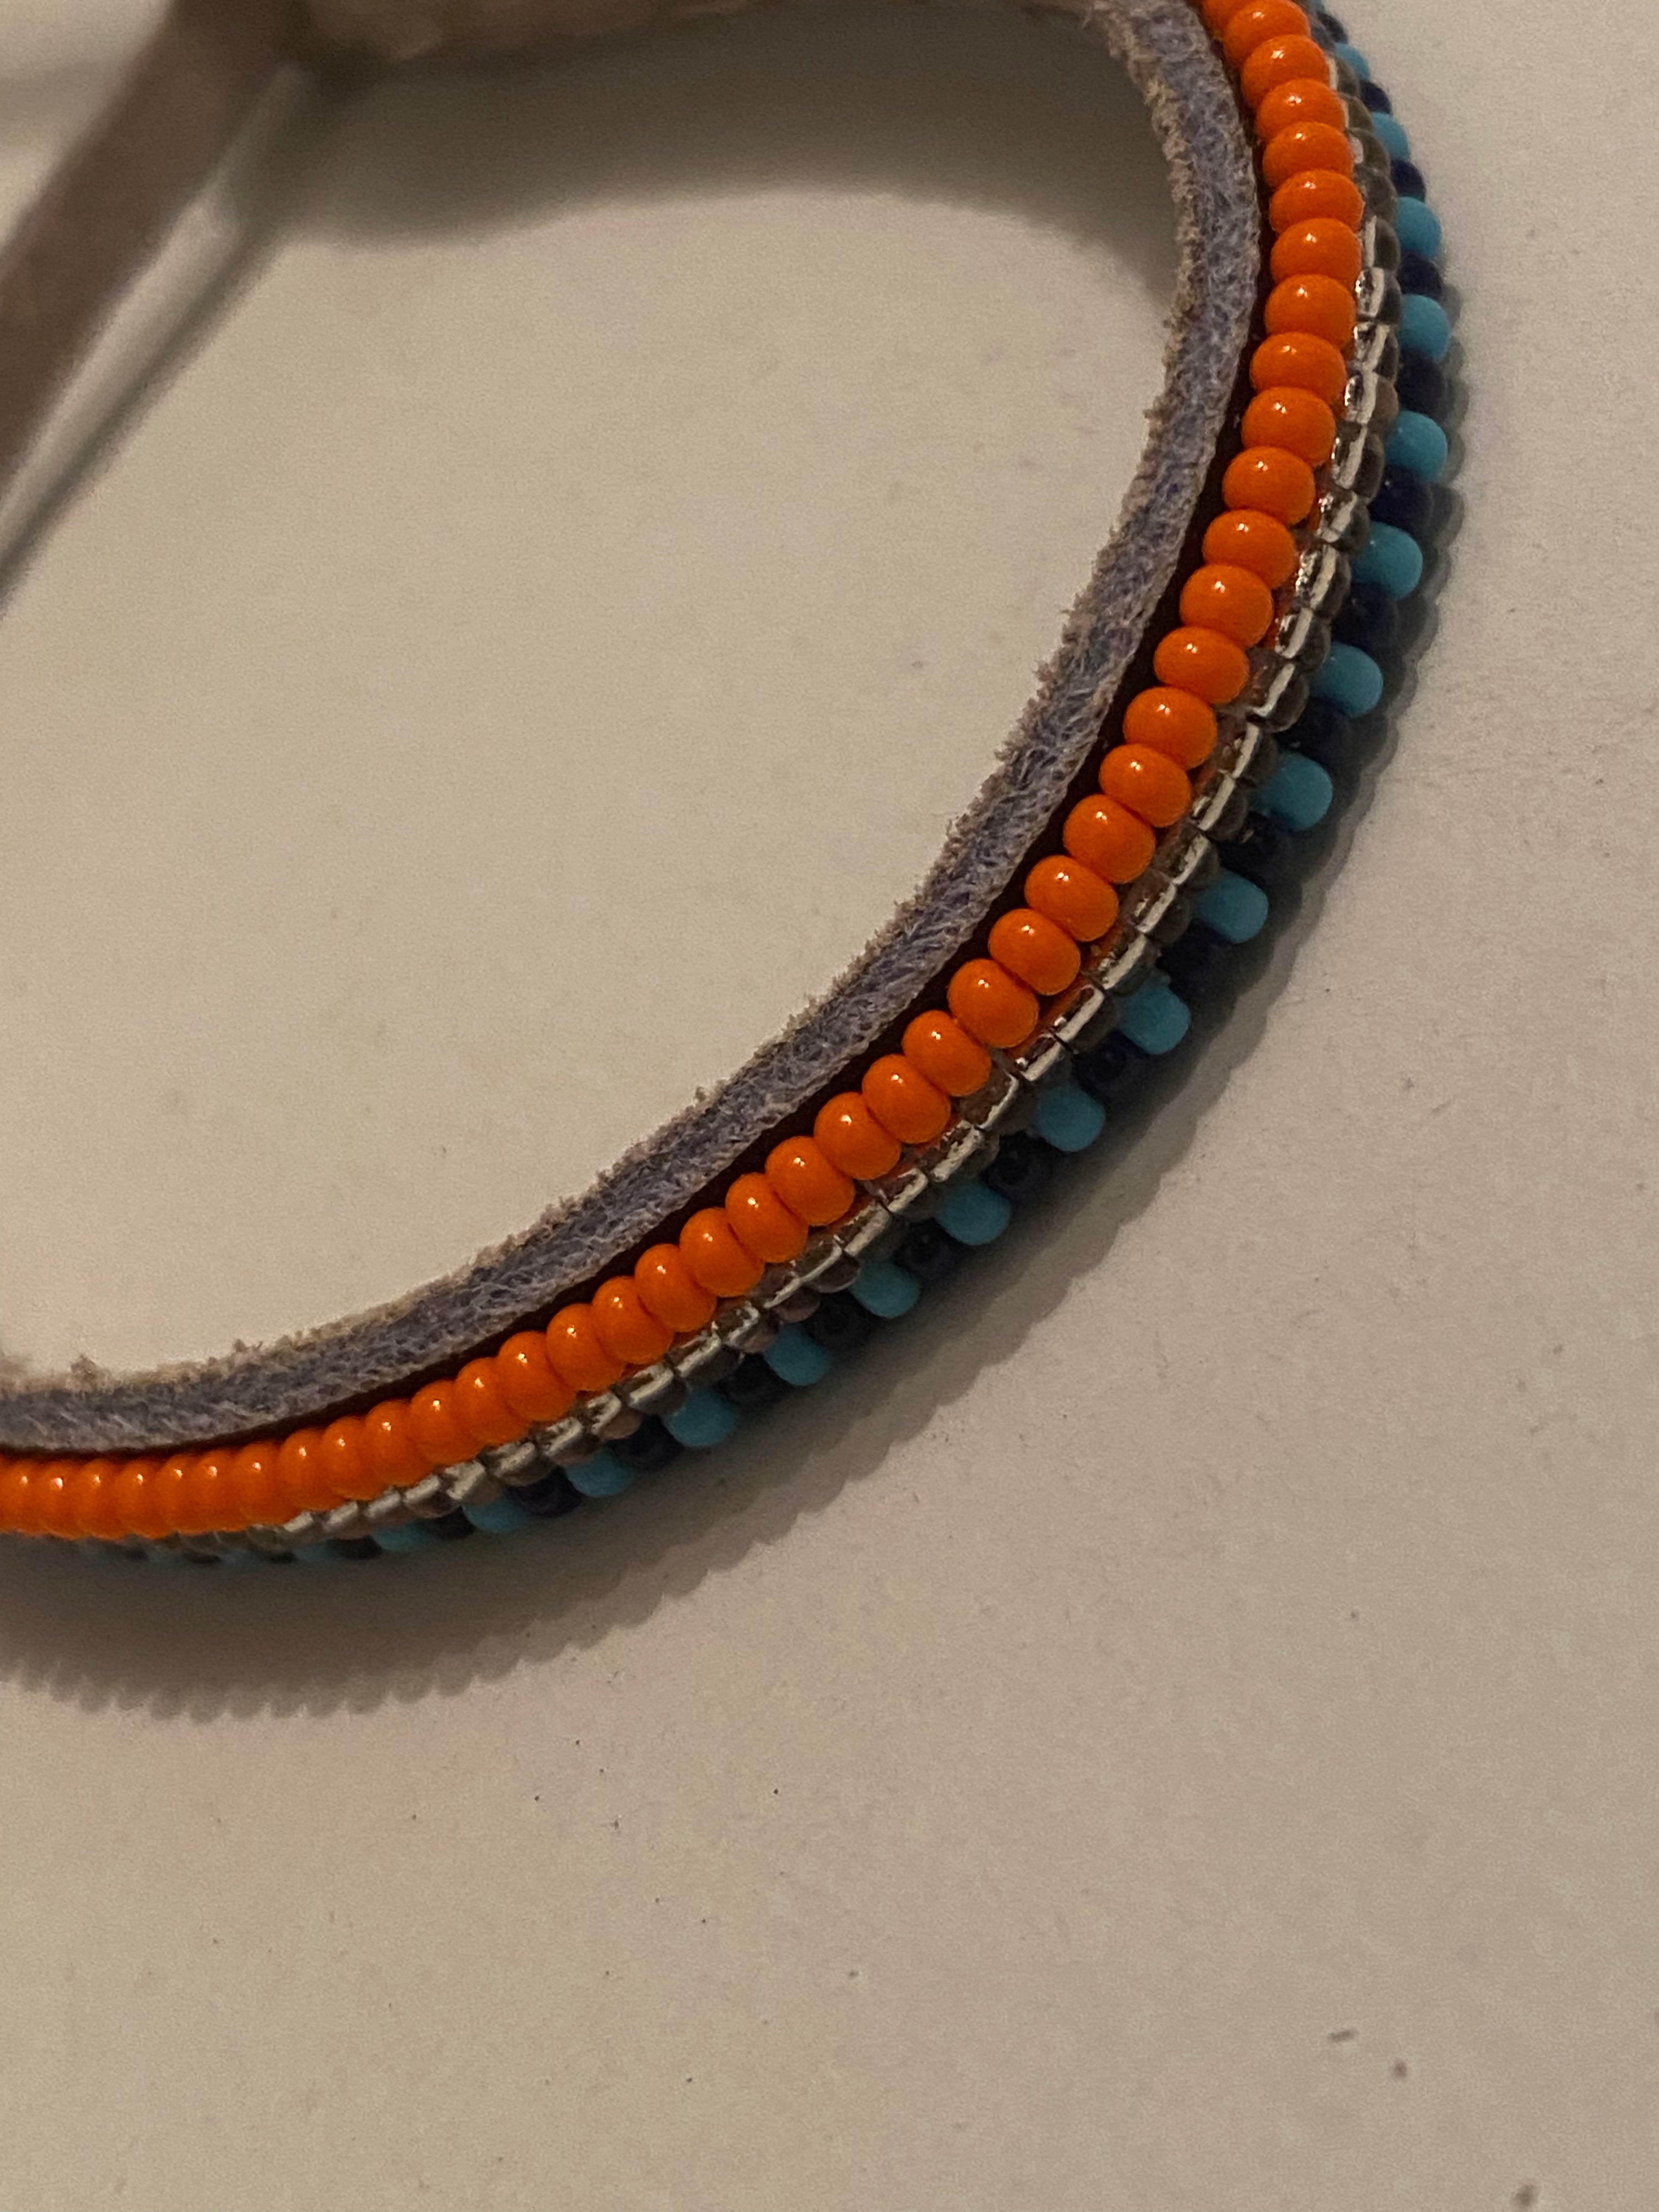 Armband orange/silver/light blue &dark blue long stripes